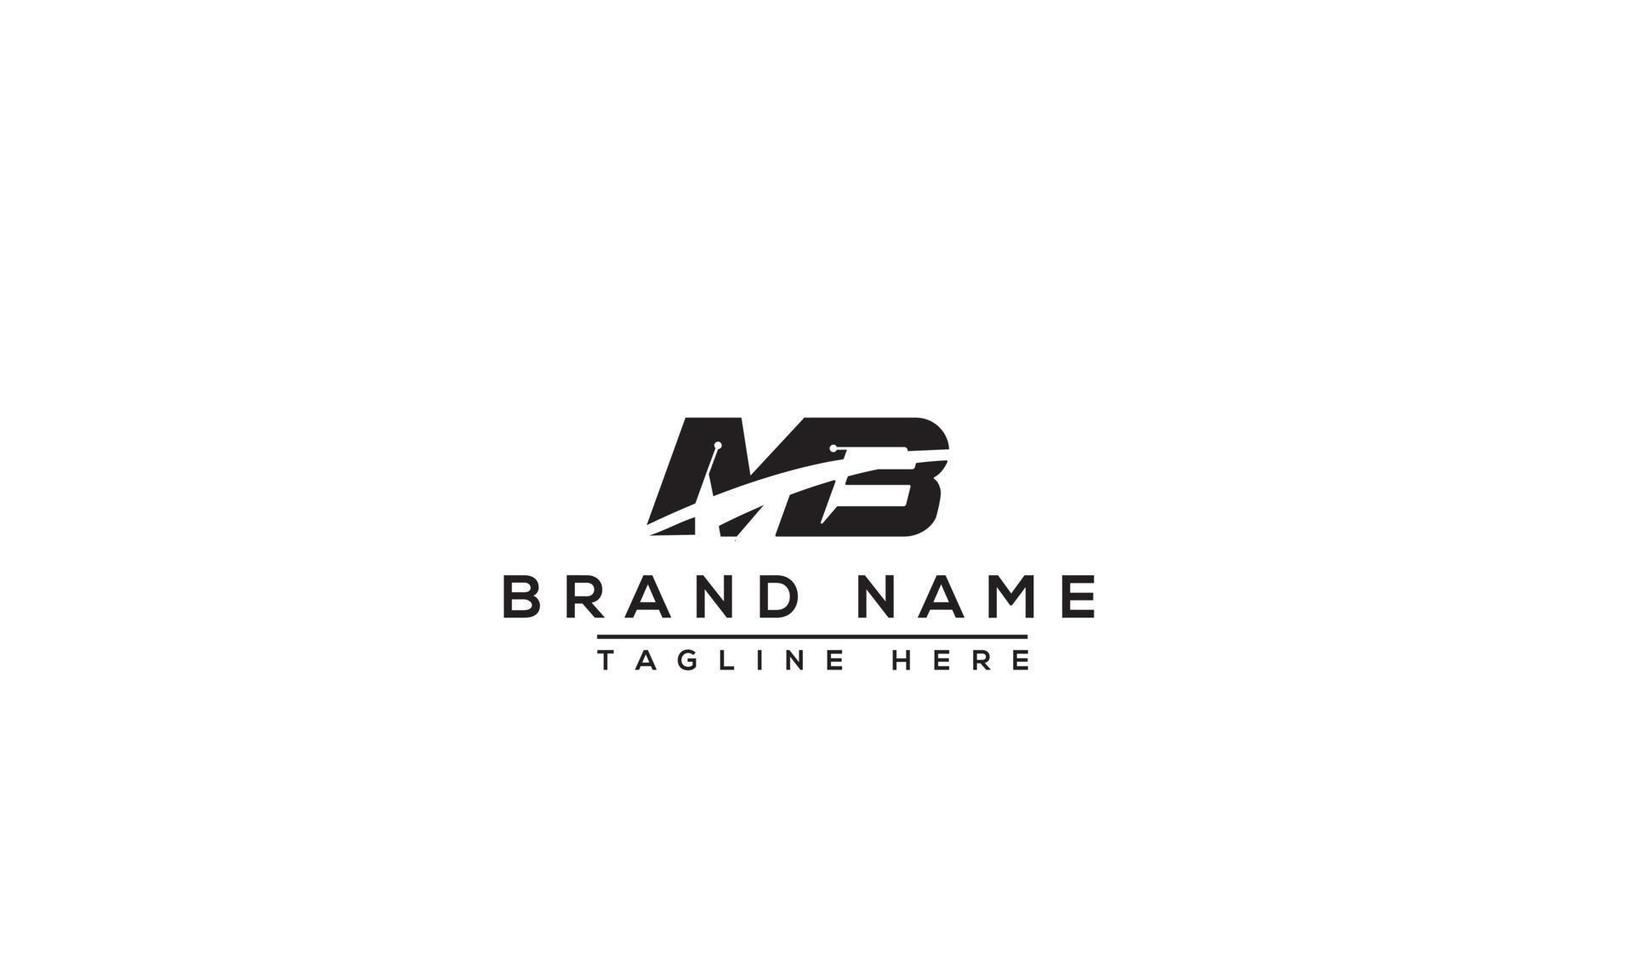 MB Logo Design Template Vector Graphic Branding Element.